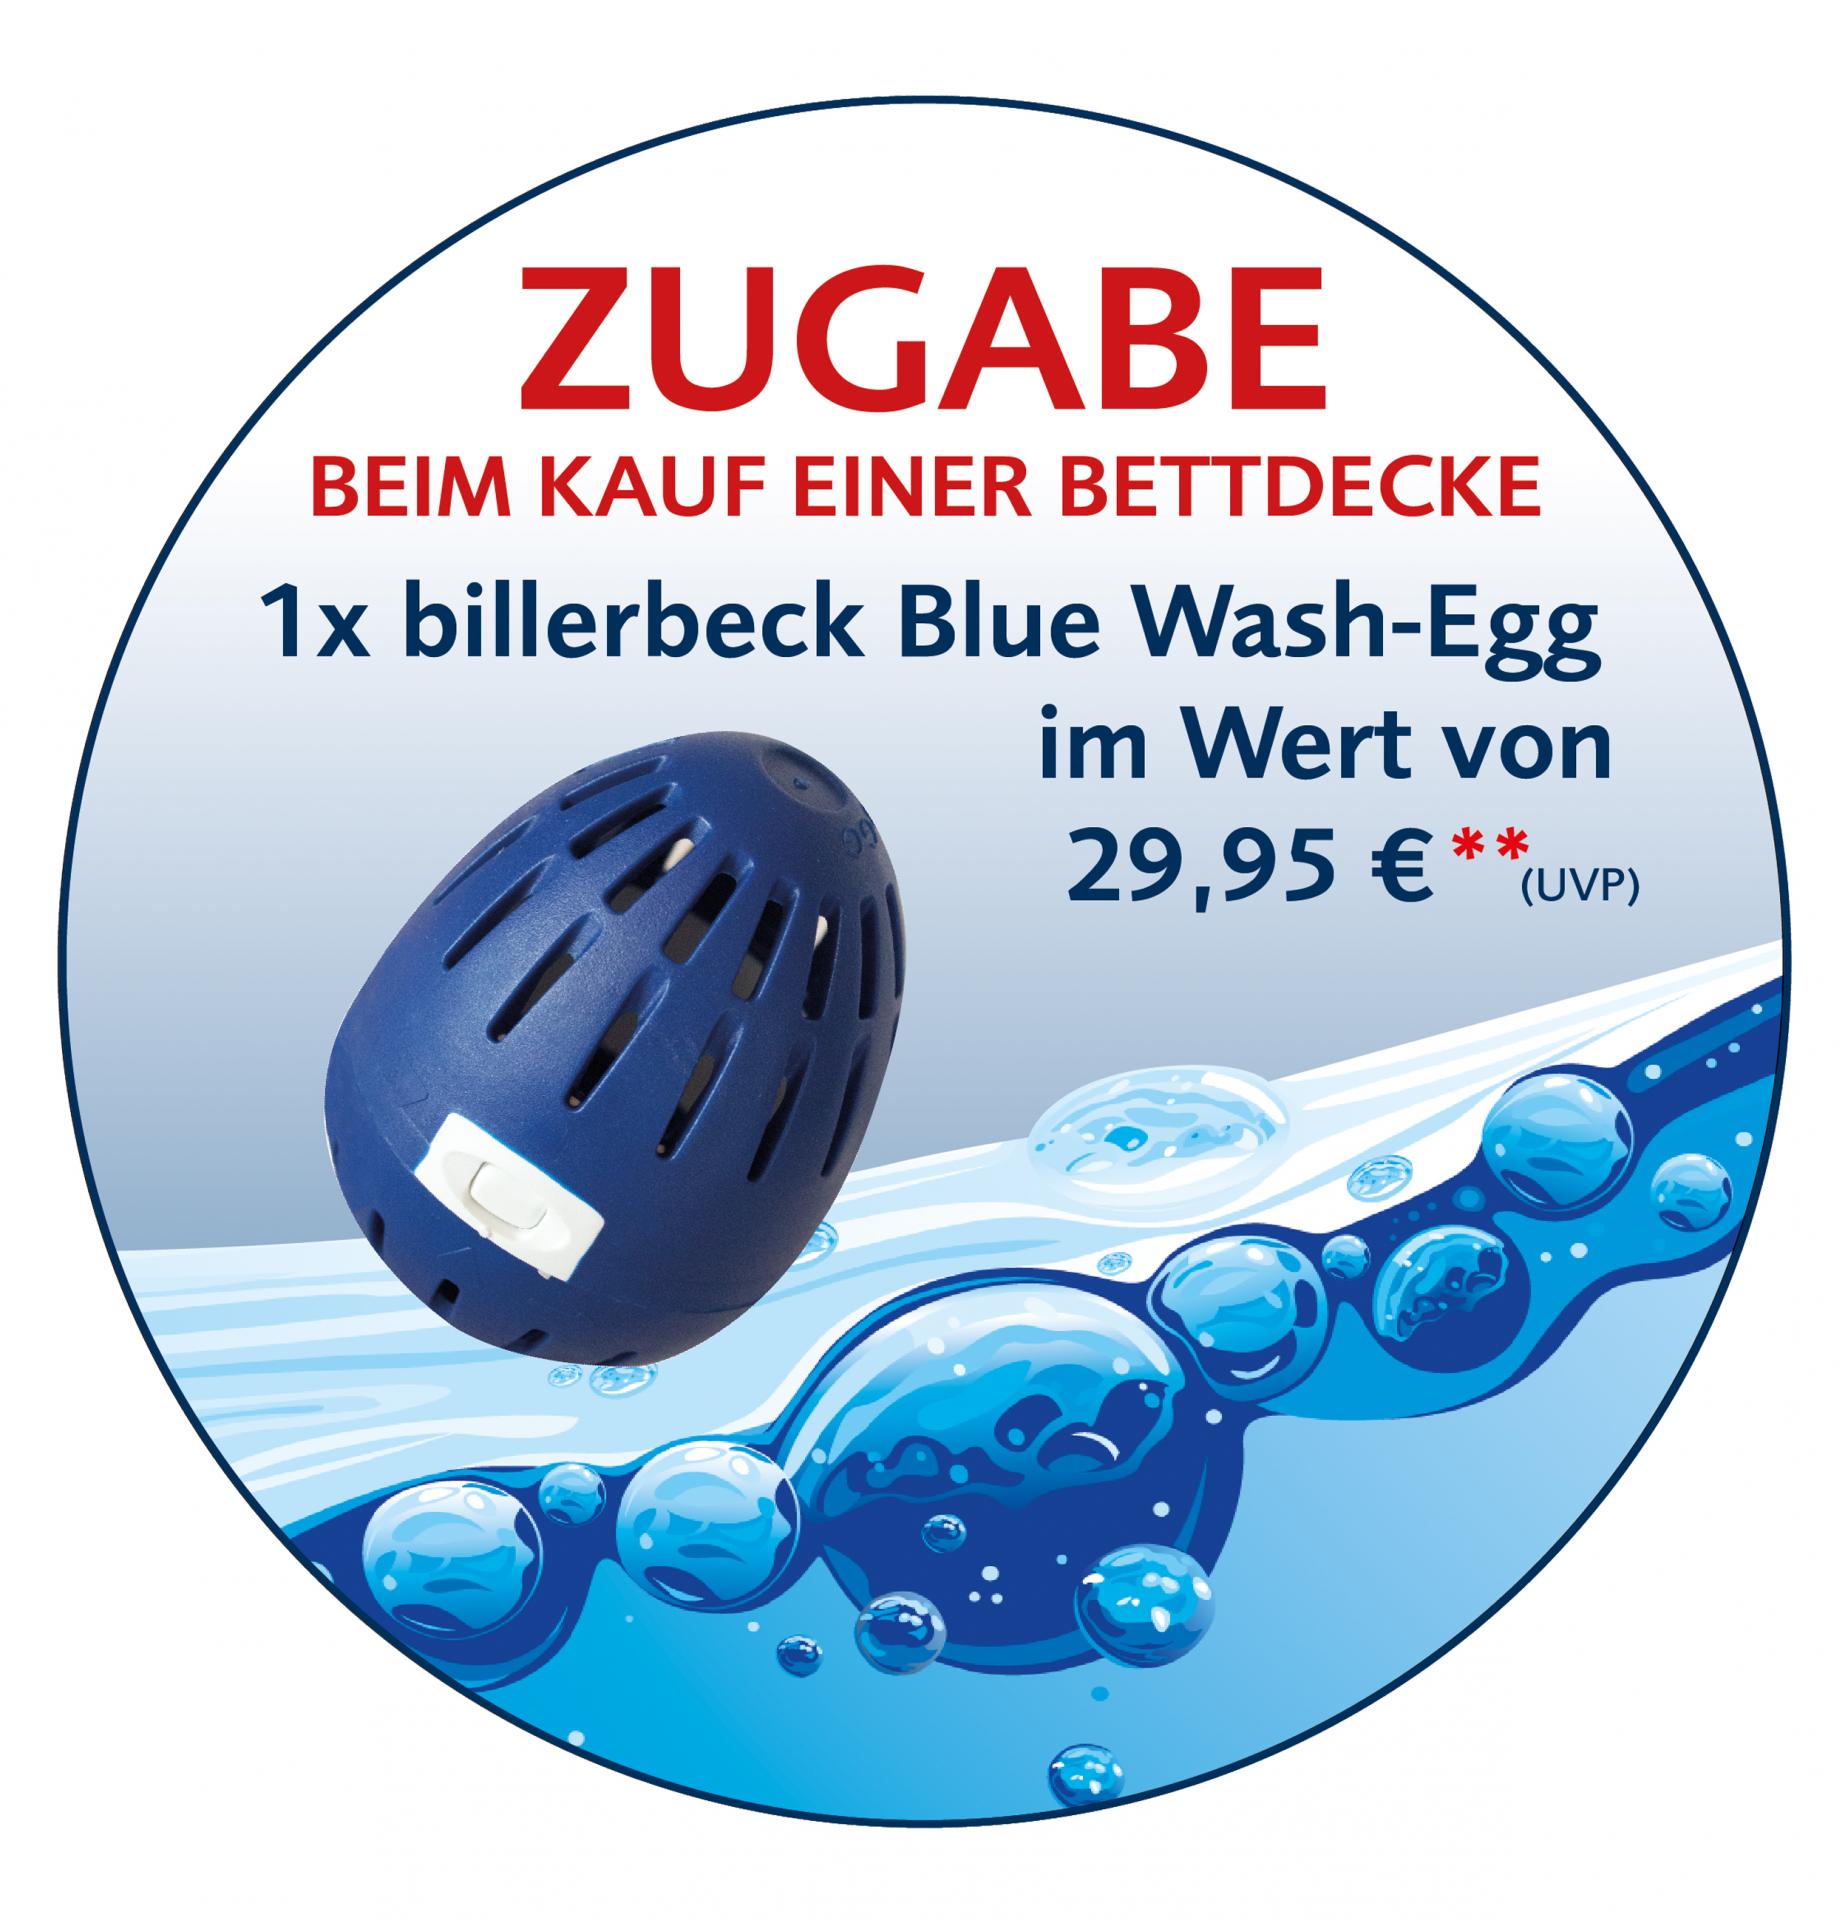 billerbeck-blue-wash-egg_organic-detergent_addition-with-purchase
